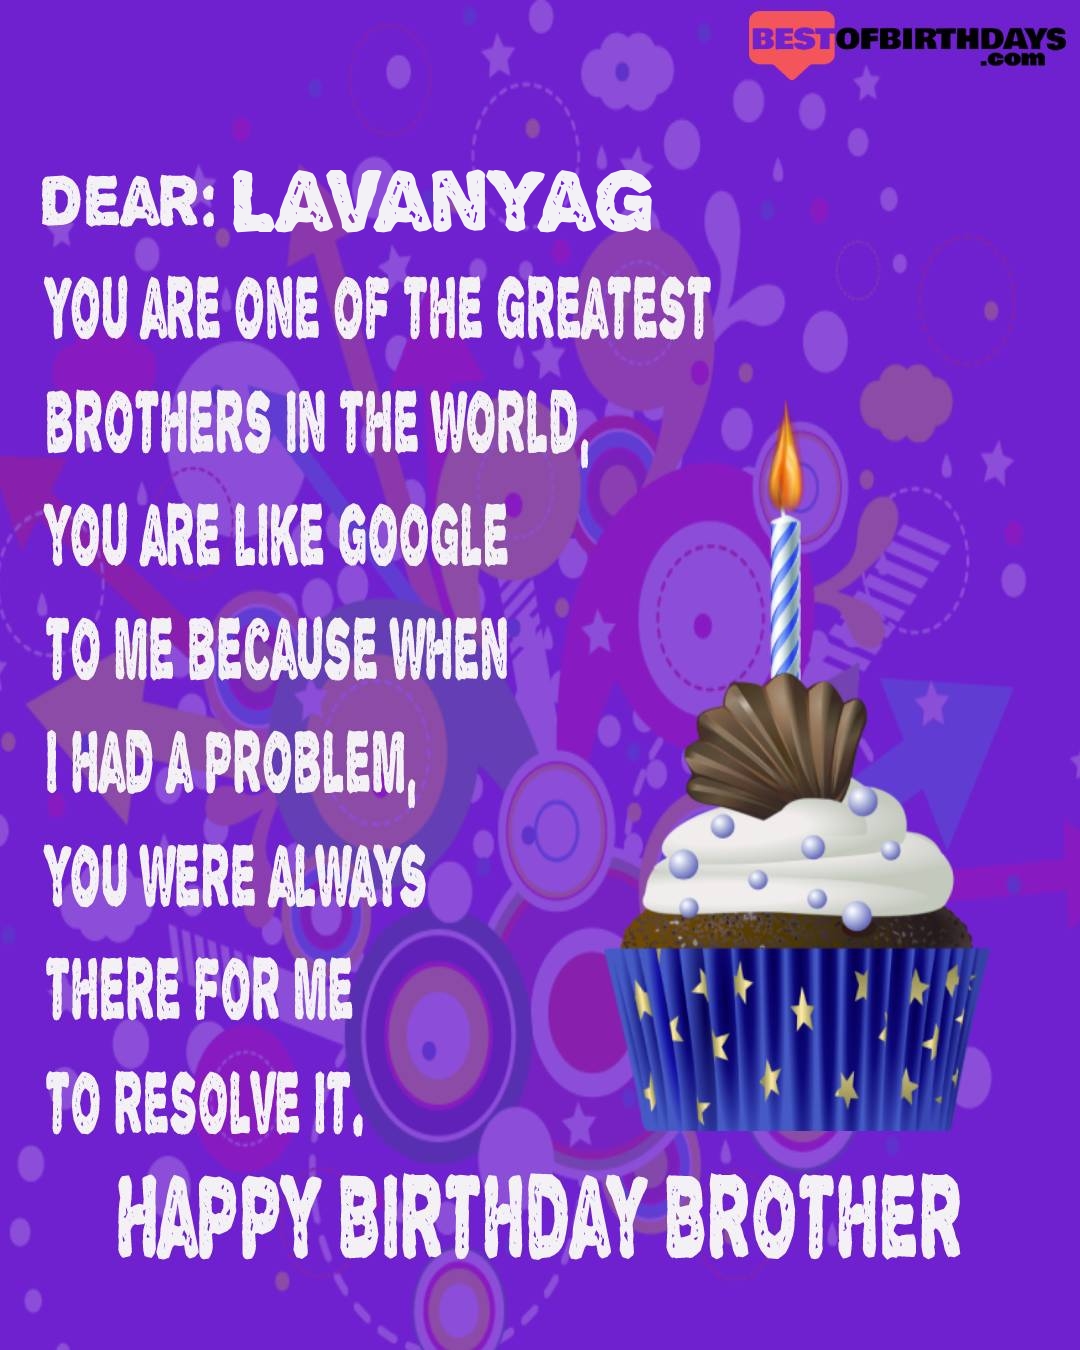 Happy birthday lavanyag bhai brother bro